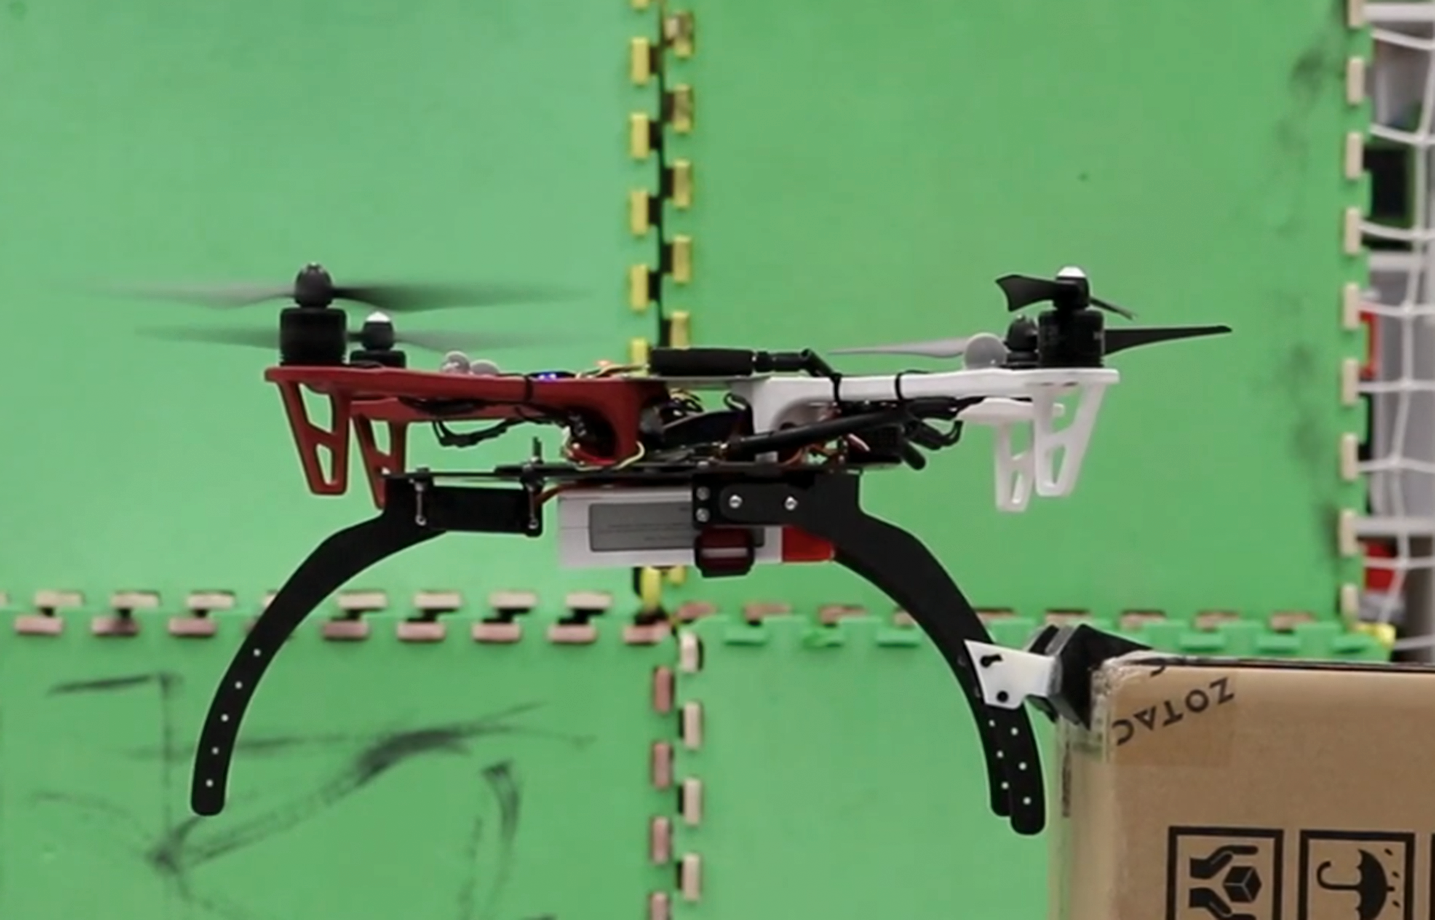 Far hagl Fortolke Drones get a grip | Nature Electronics